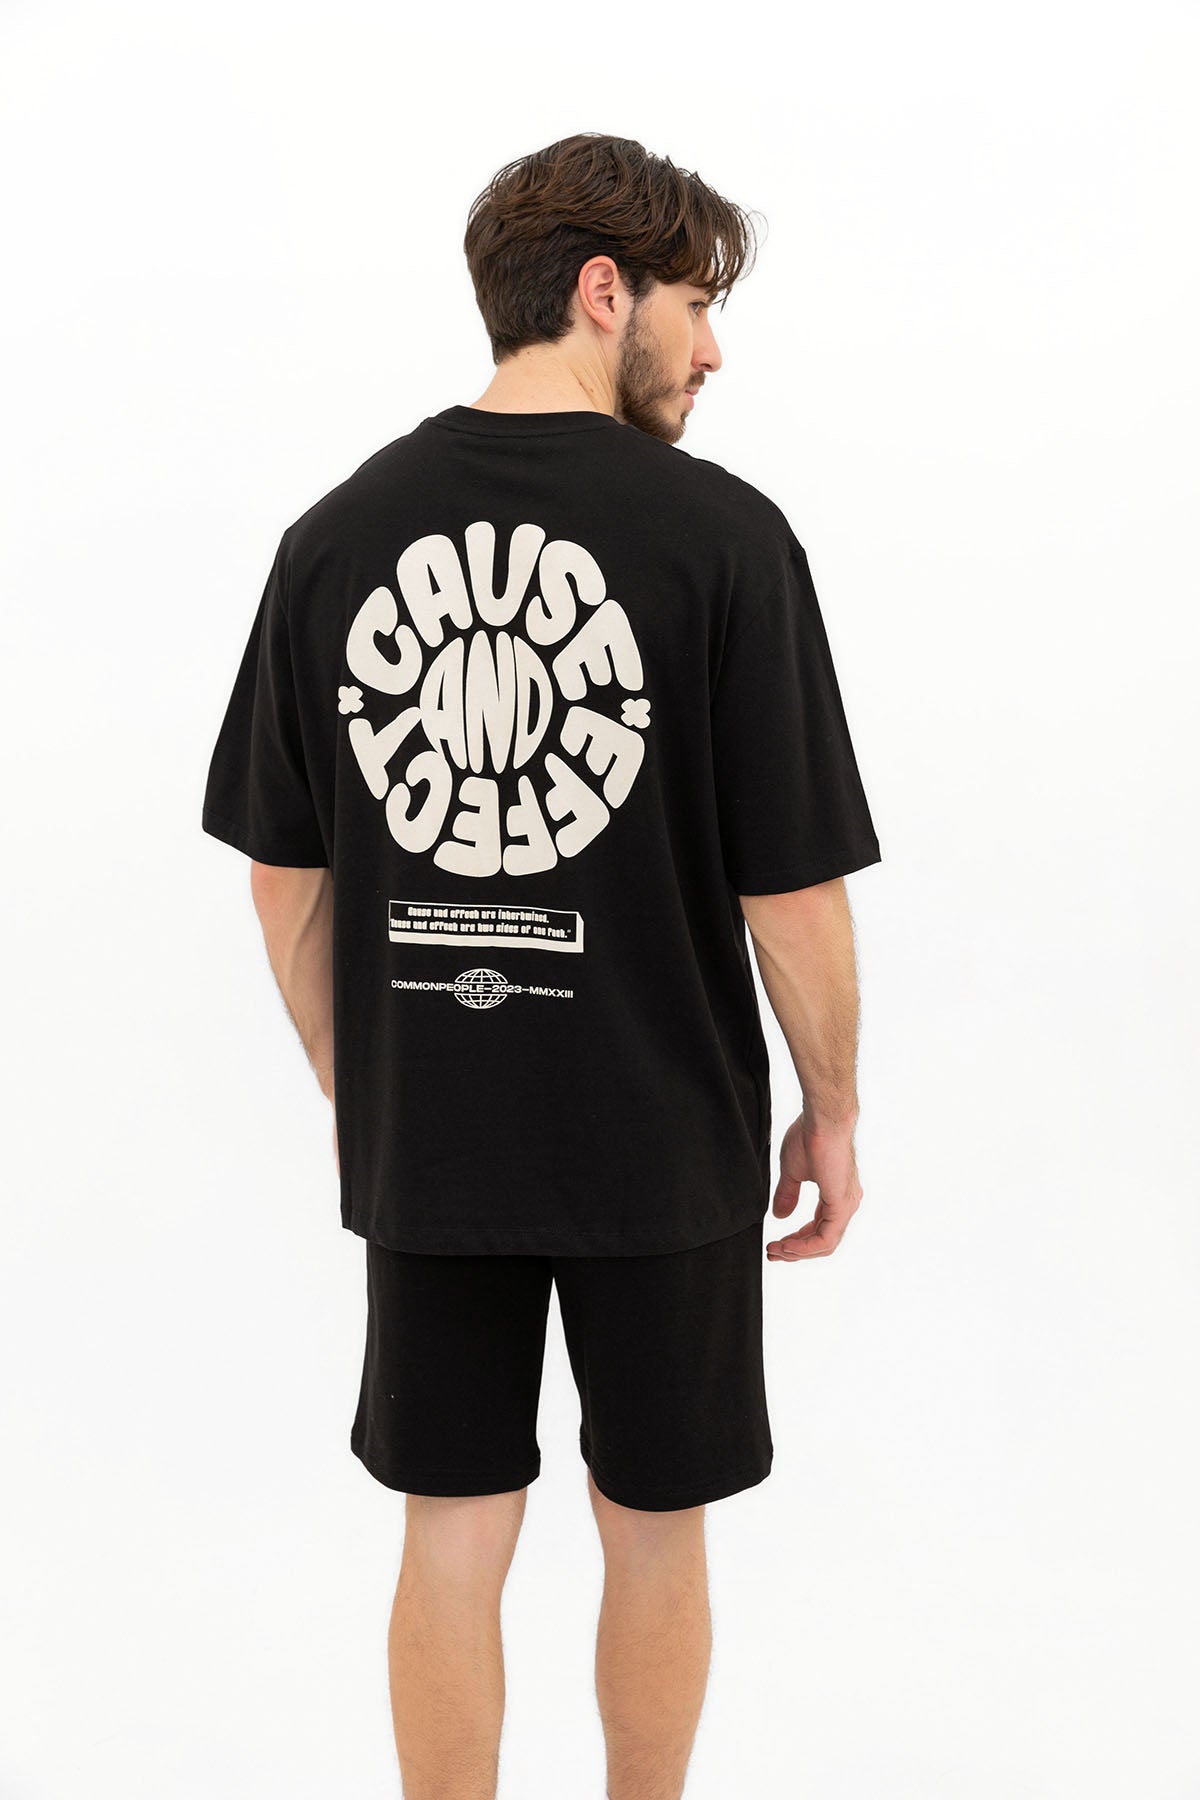 Cause & Effect - Black - Oversized T-shirt